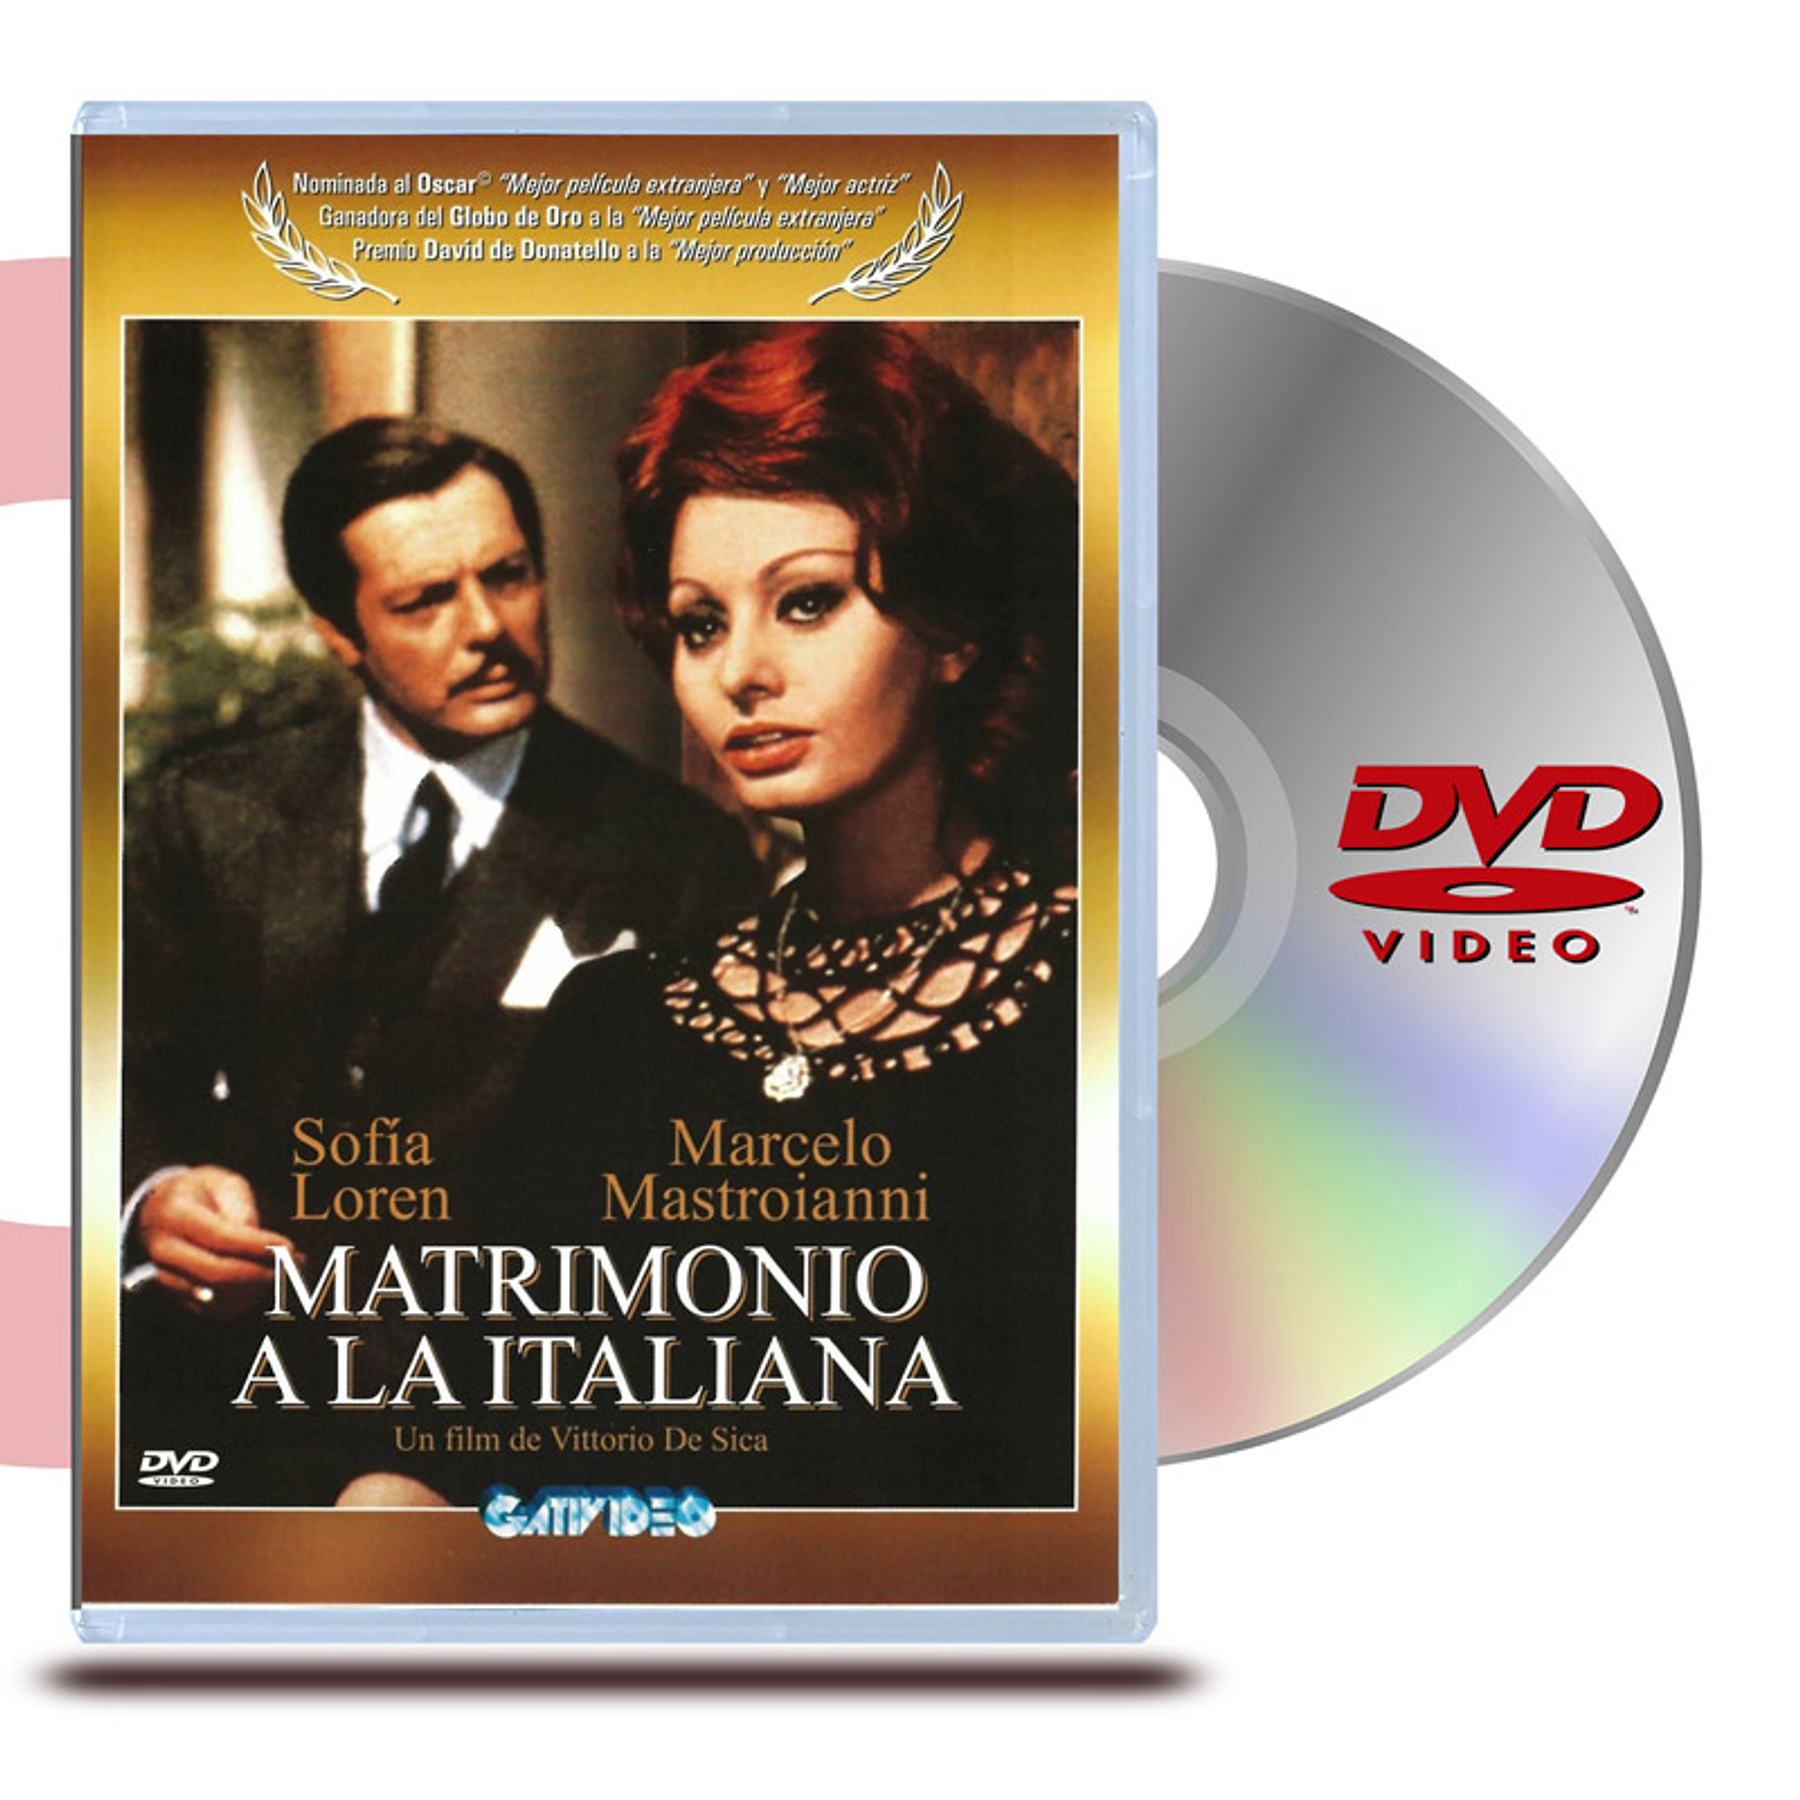 DVD MATRIMONIO A LA ITALIANA